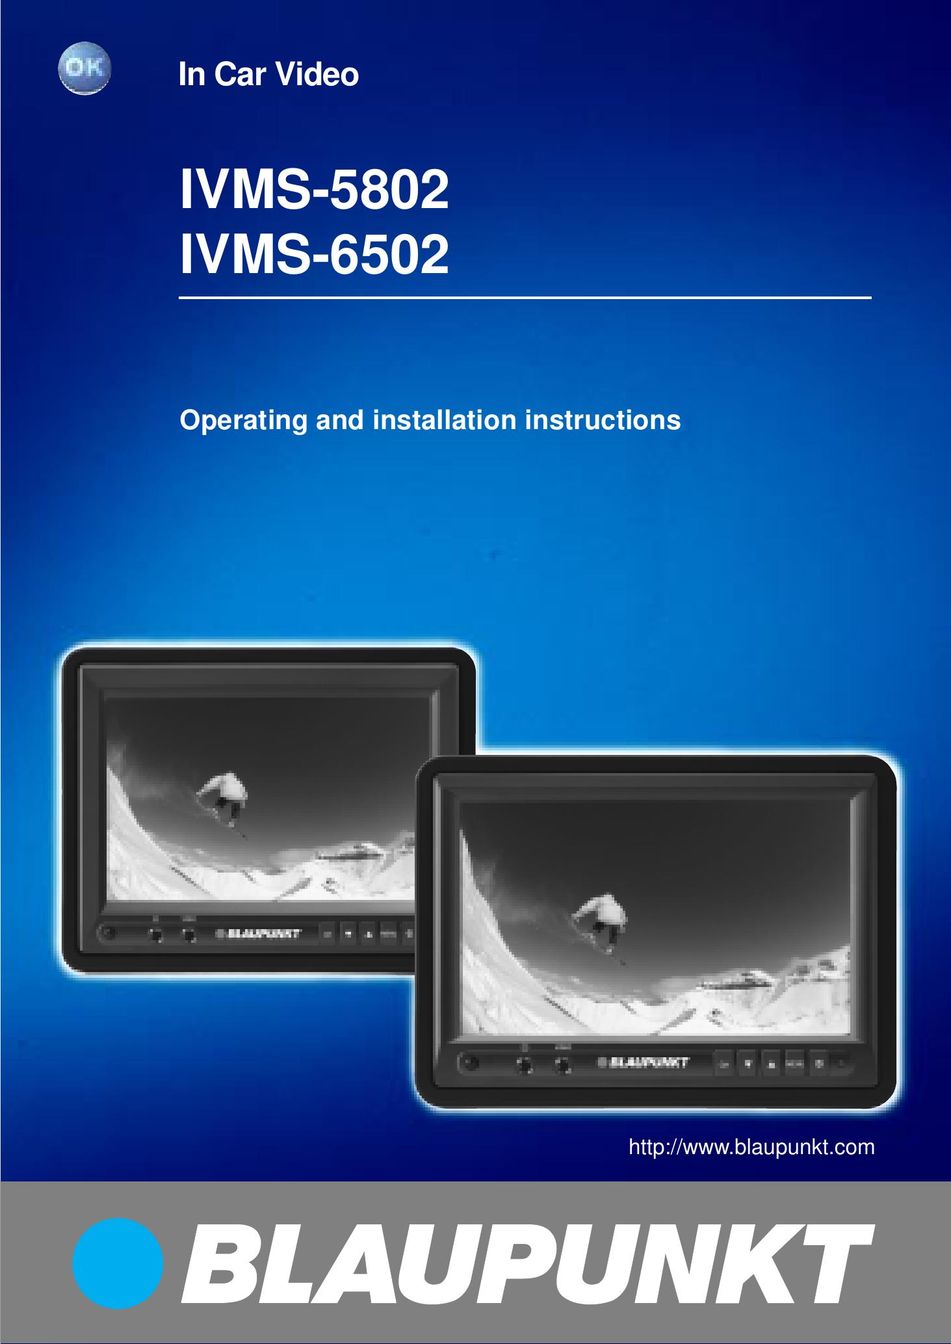 Blaupunkt IVMS-5802 Car Video System User Manual